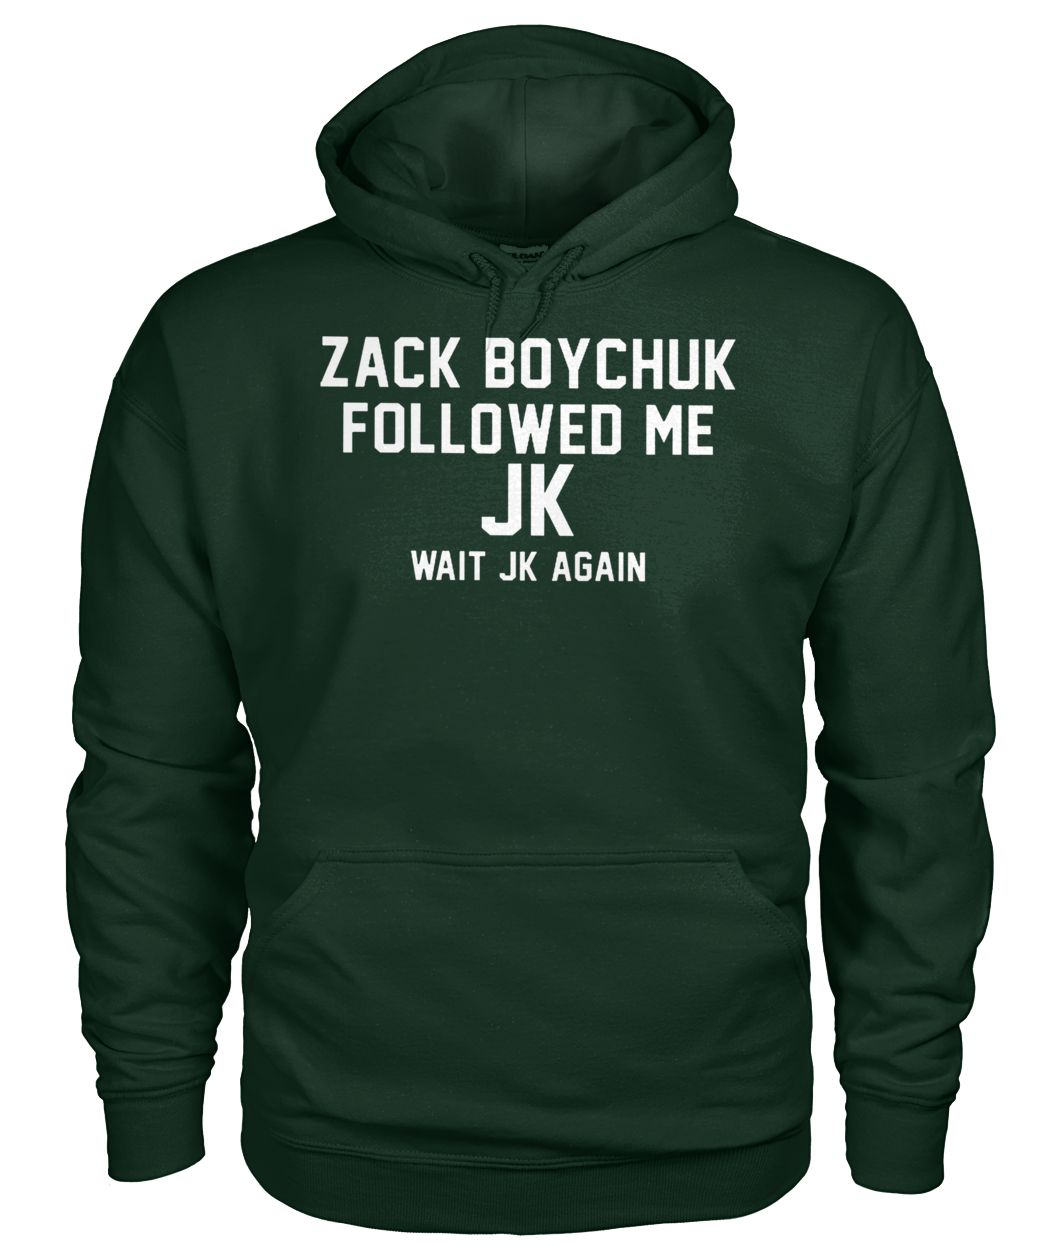 Zack boychuk followed me Jk wait Jk again gildan hoodie